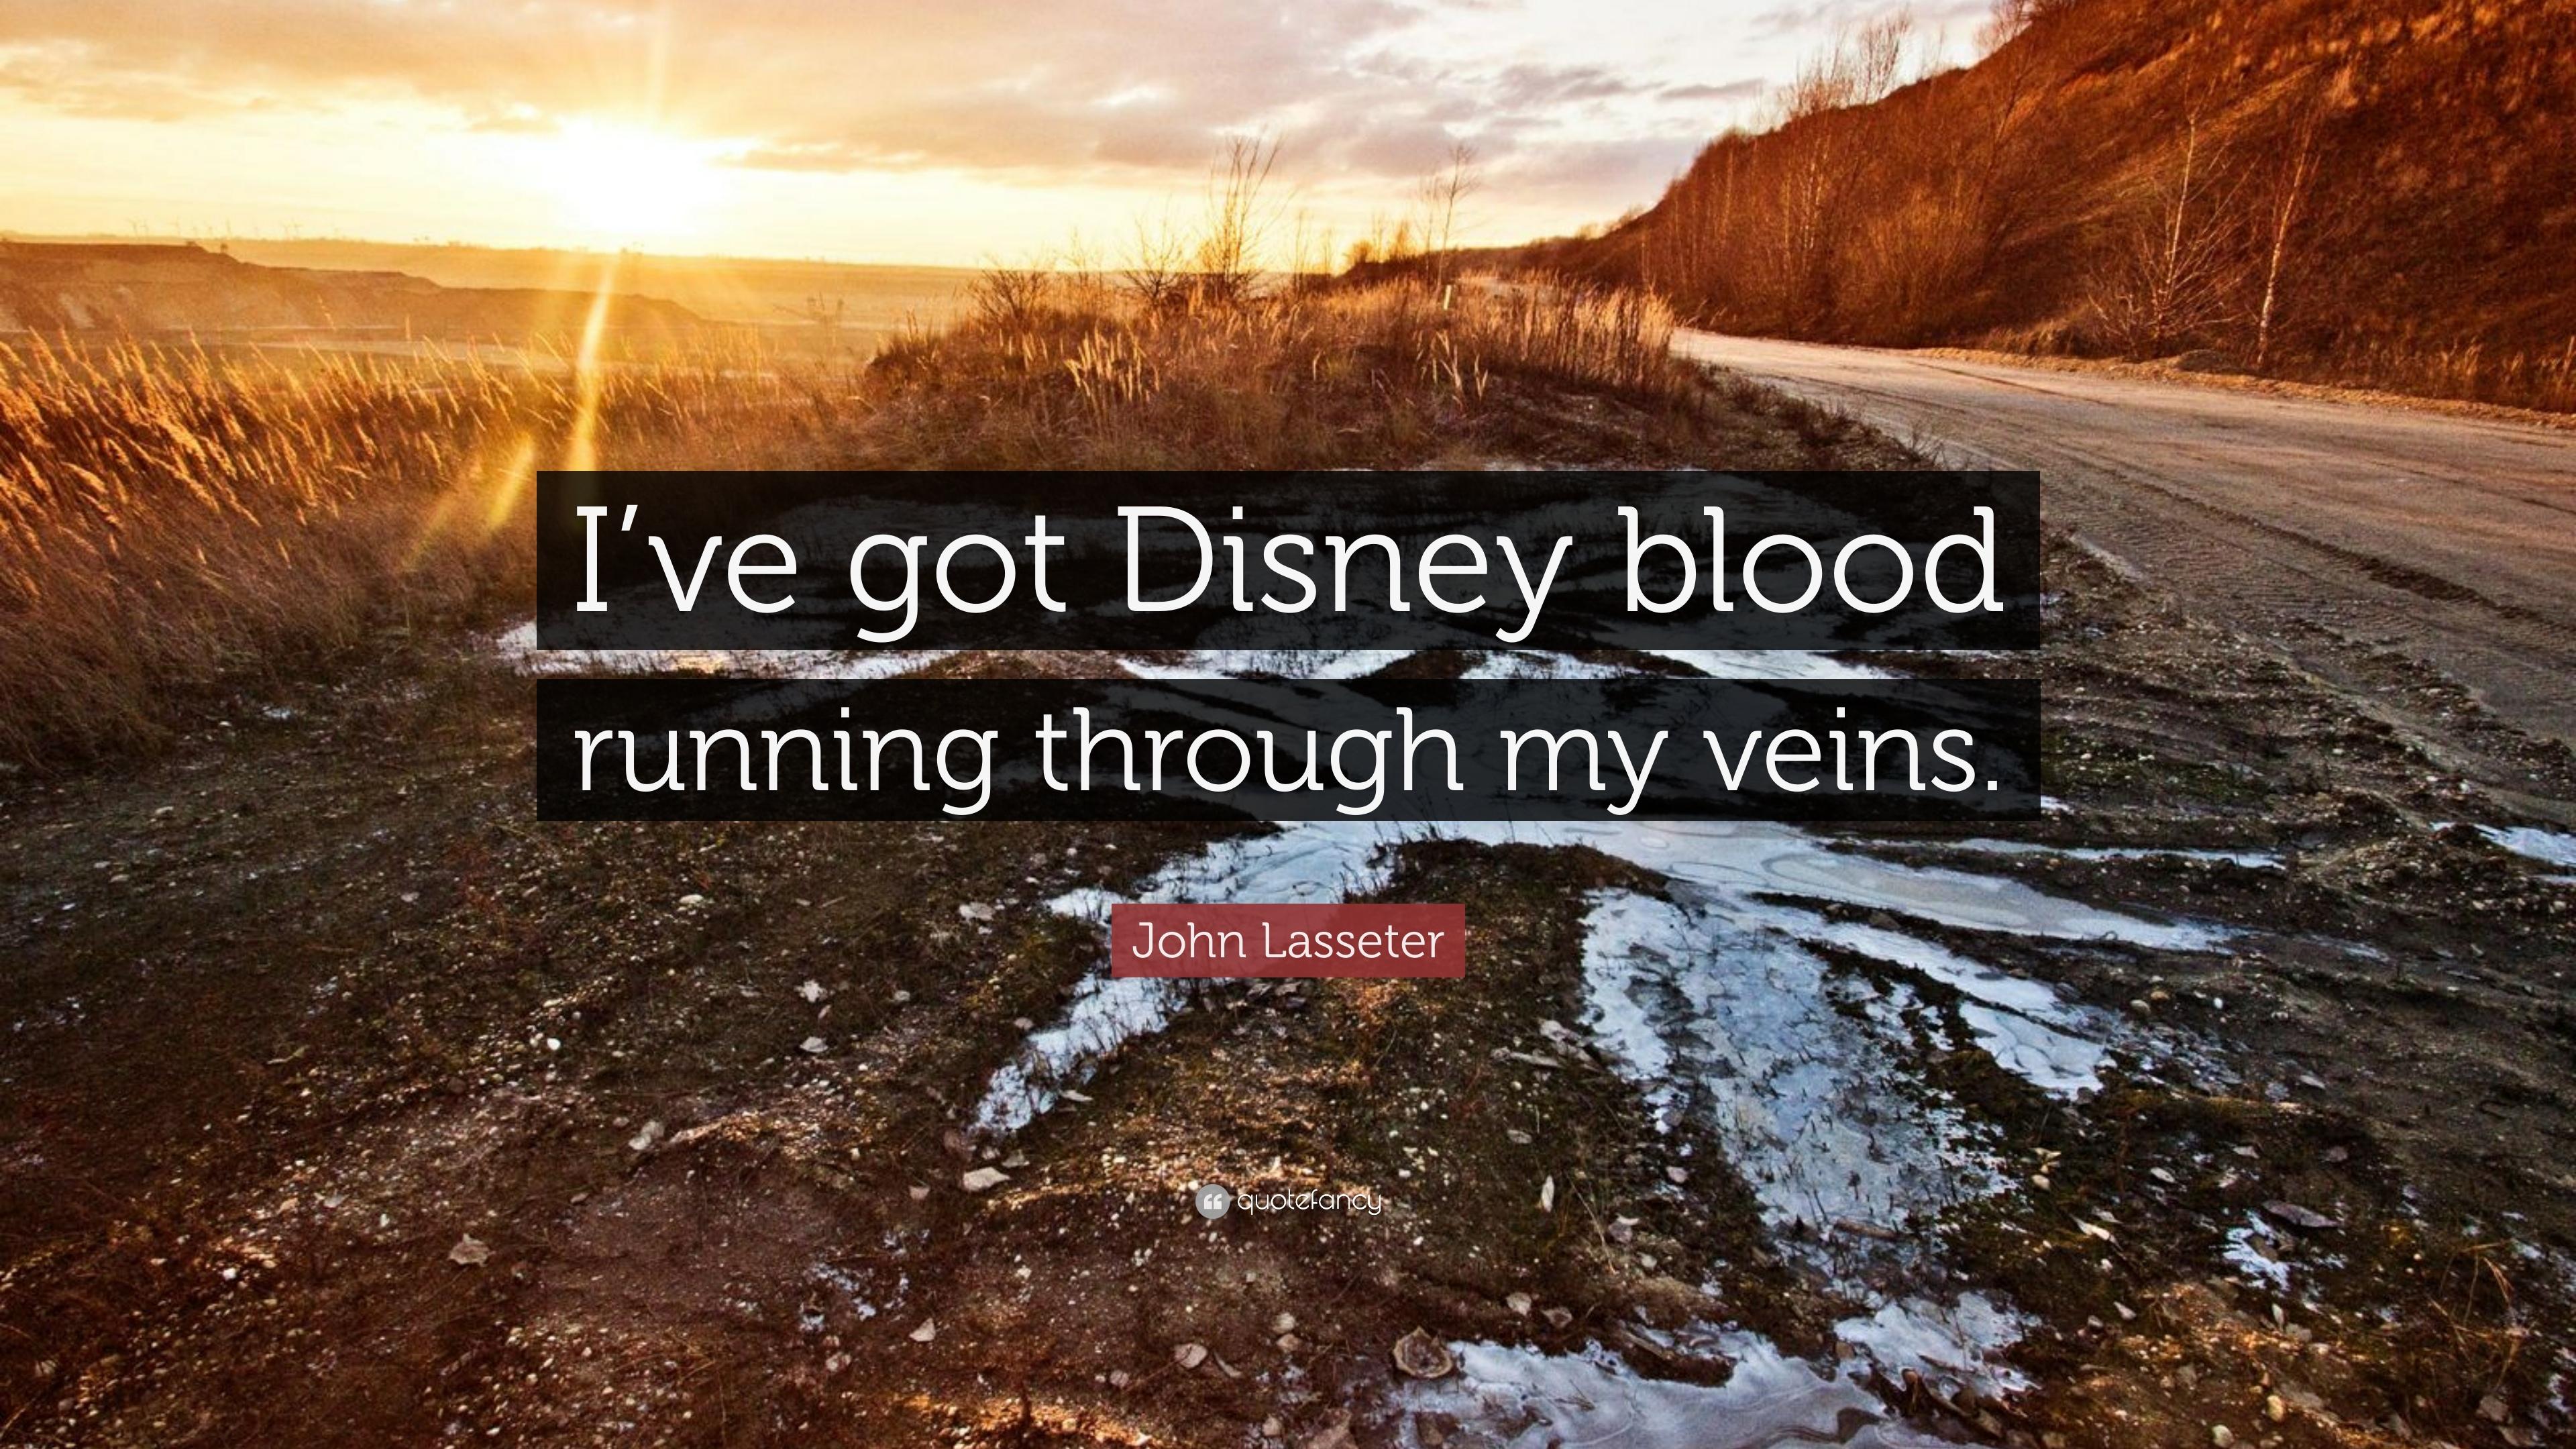 John Lasseter Quote: “I've got Disney blood running through my veins